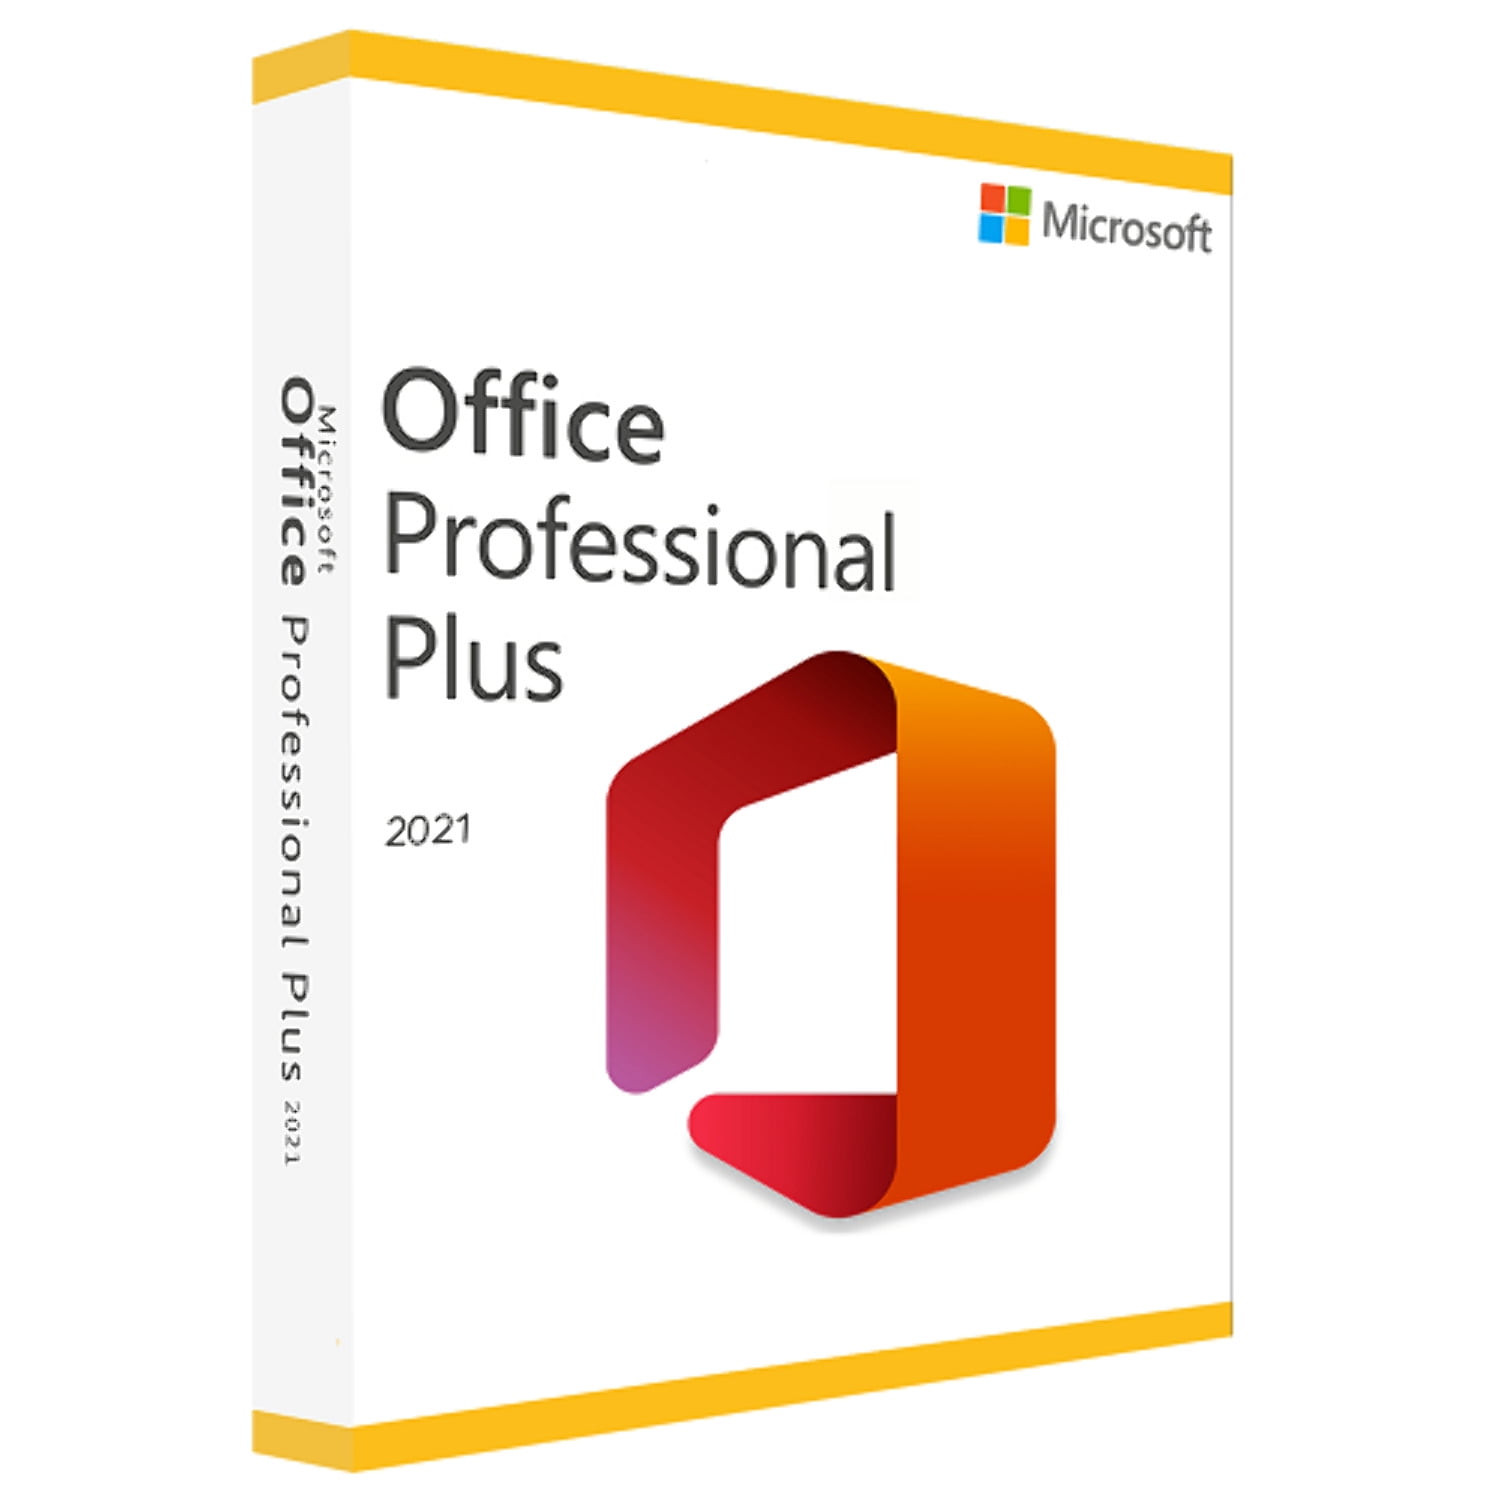 Microsoft Office 2021 Professional Plus Buy on